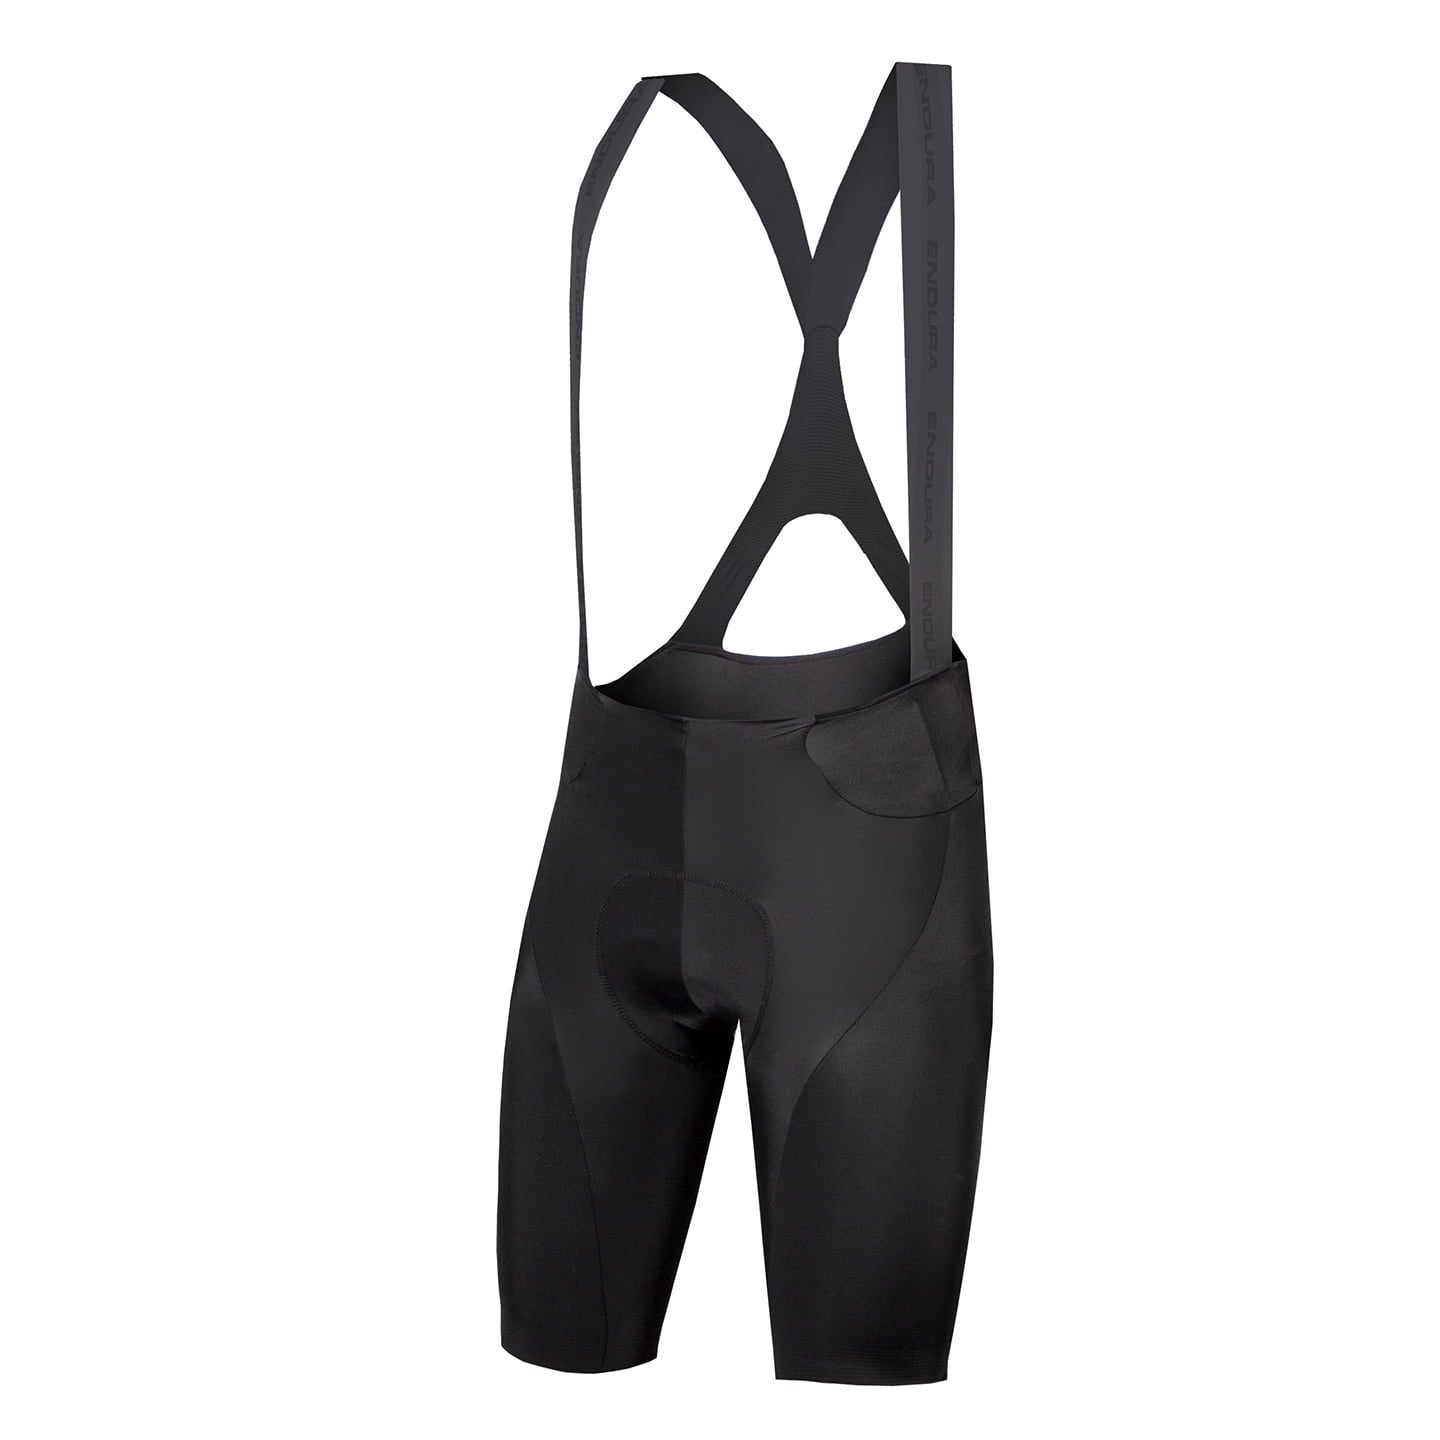 ENDURA Pro SL EGM Bib Shorts Bib Shorts, for men, size XL, Cycle shorts, Cycling clothing